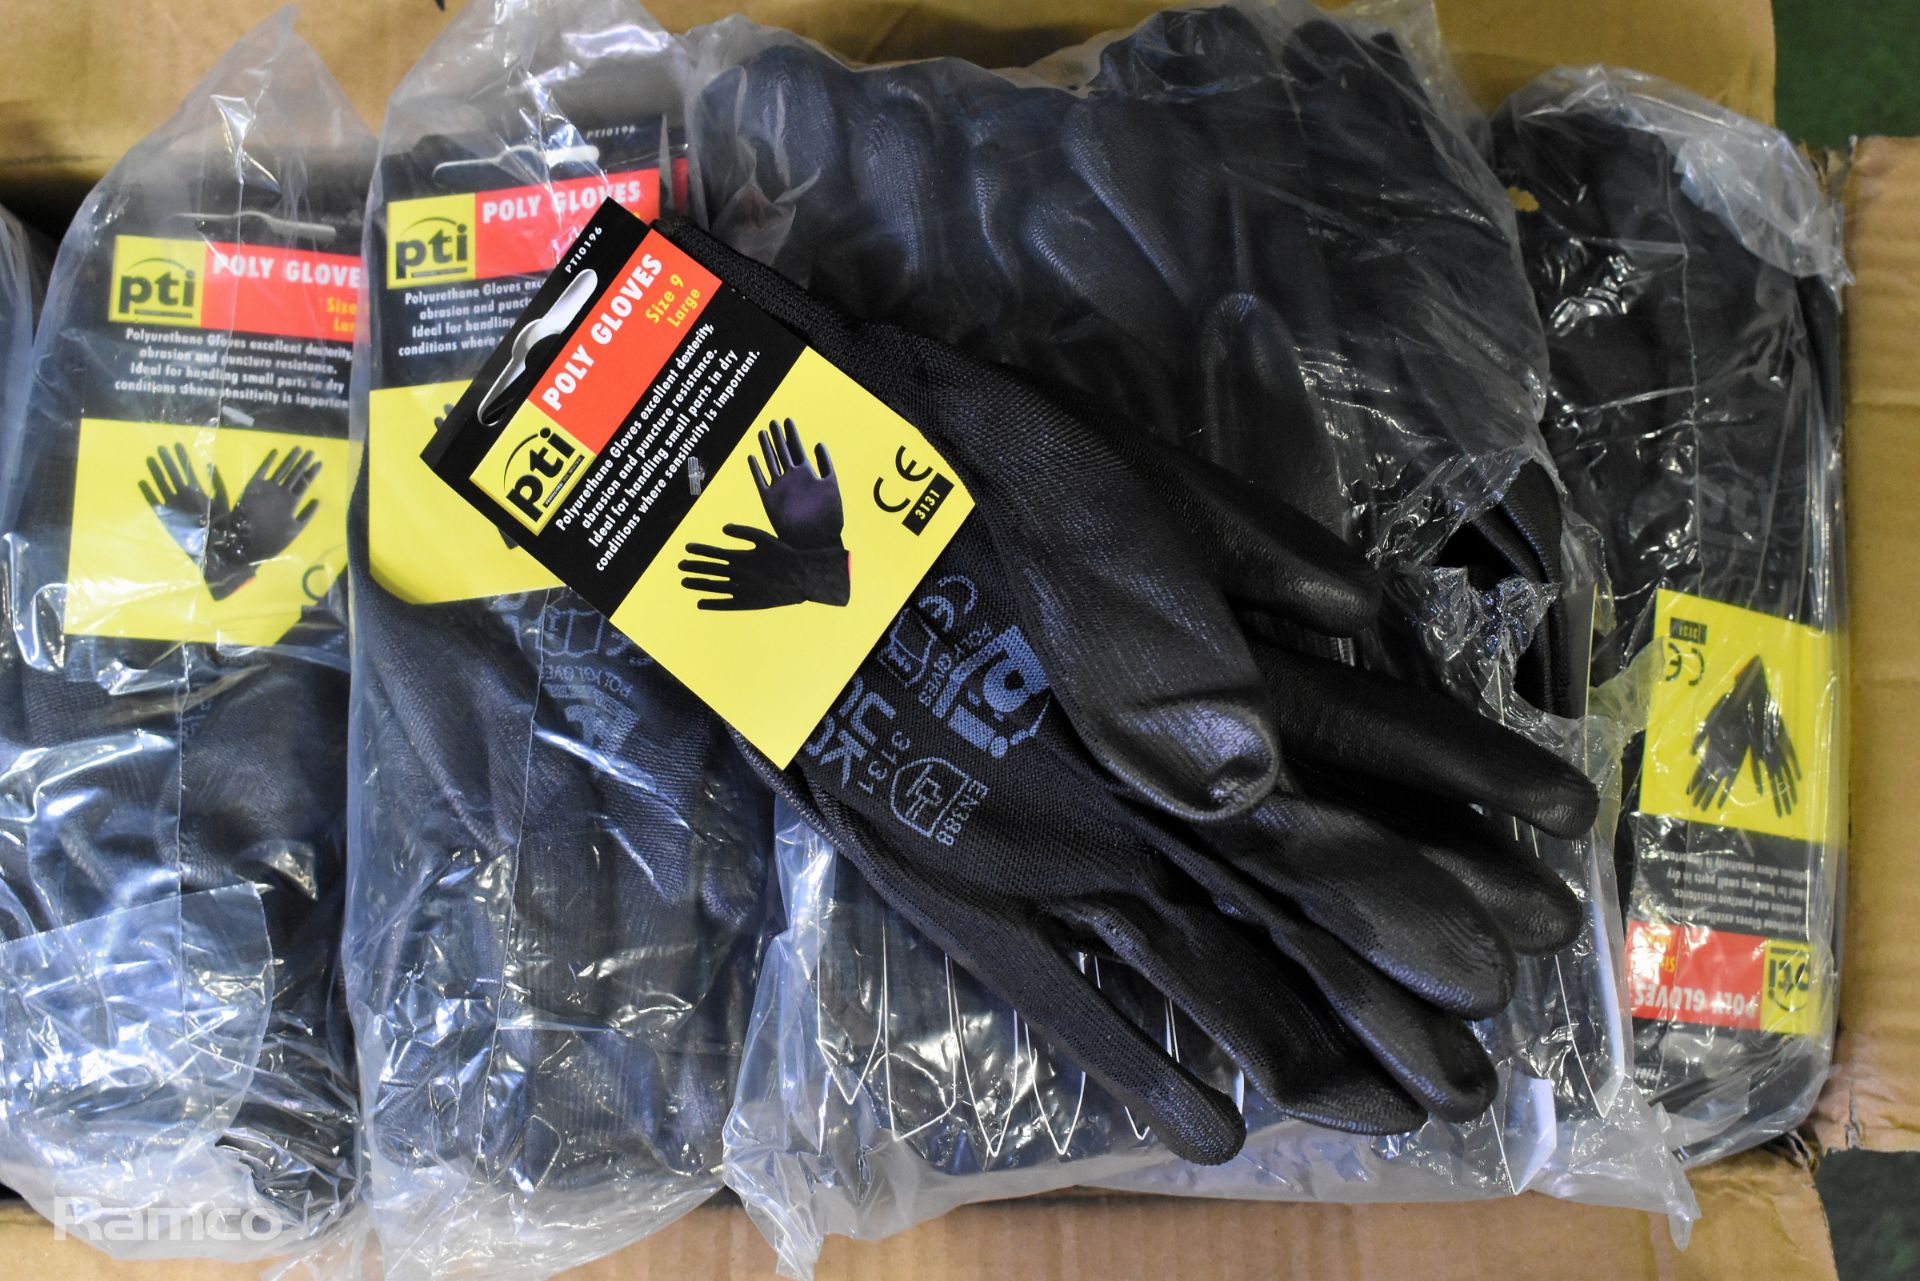 PTI Poly work gloves - size 9 large - 240 pairs - Bild 2 aus 3